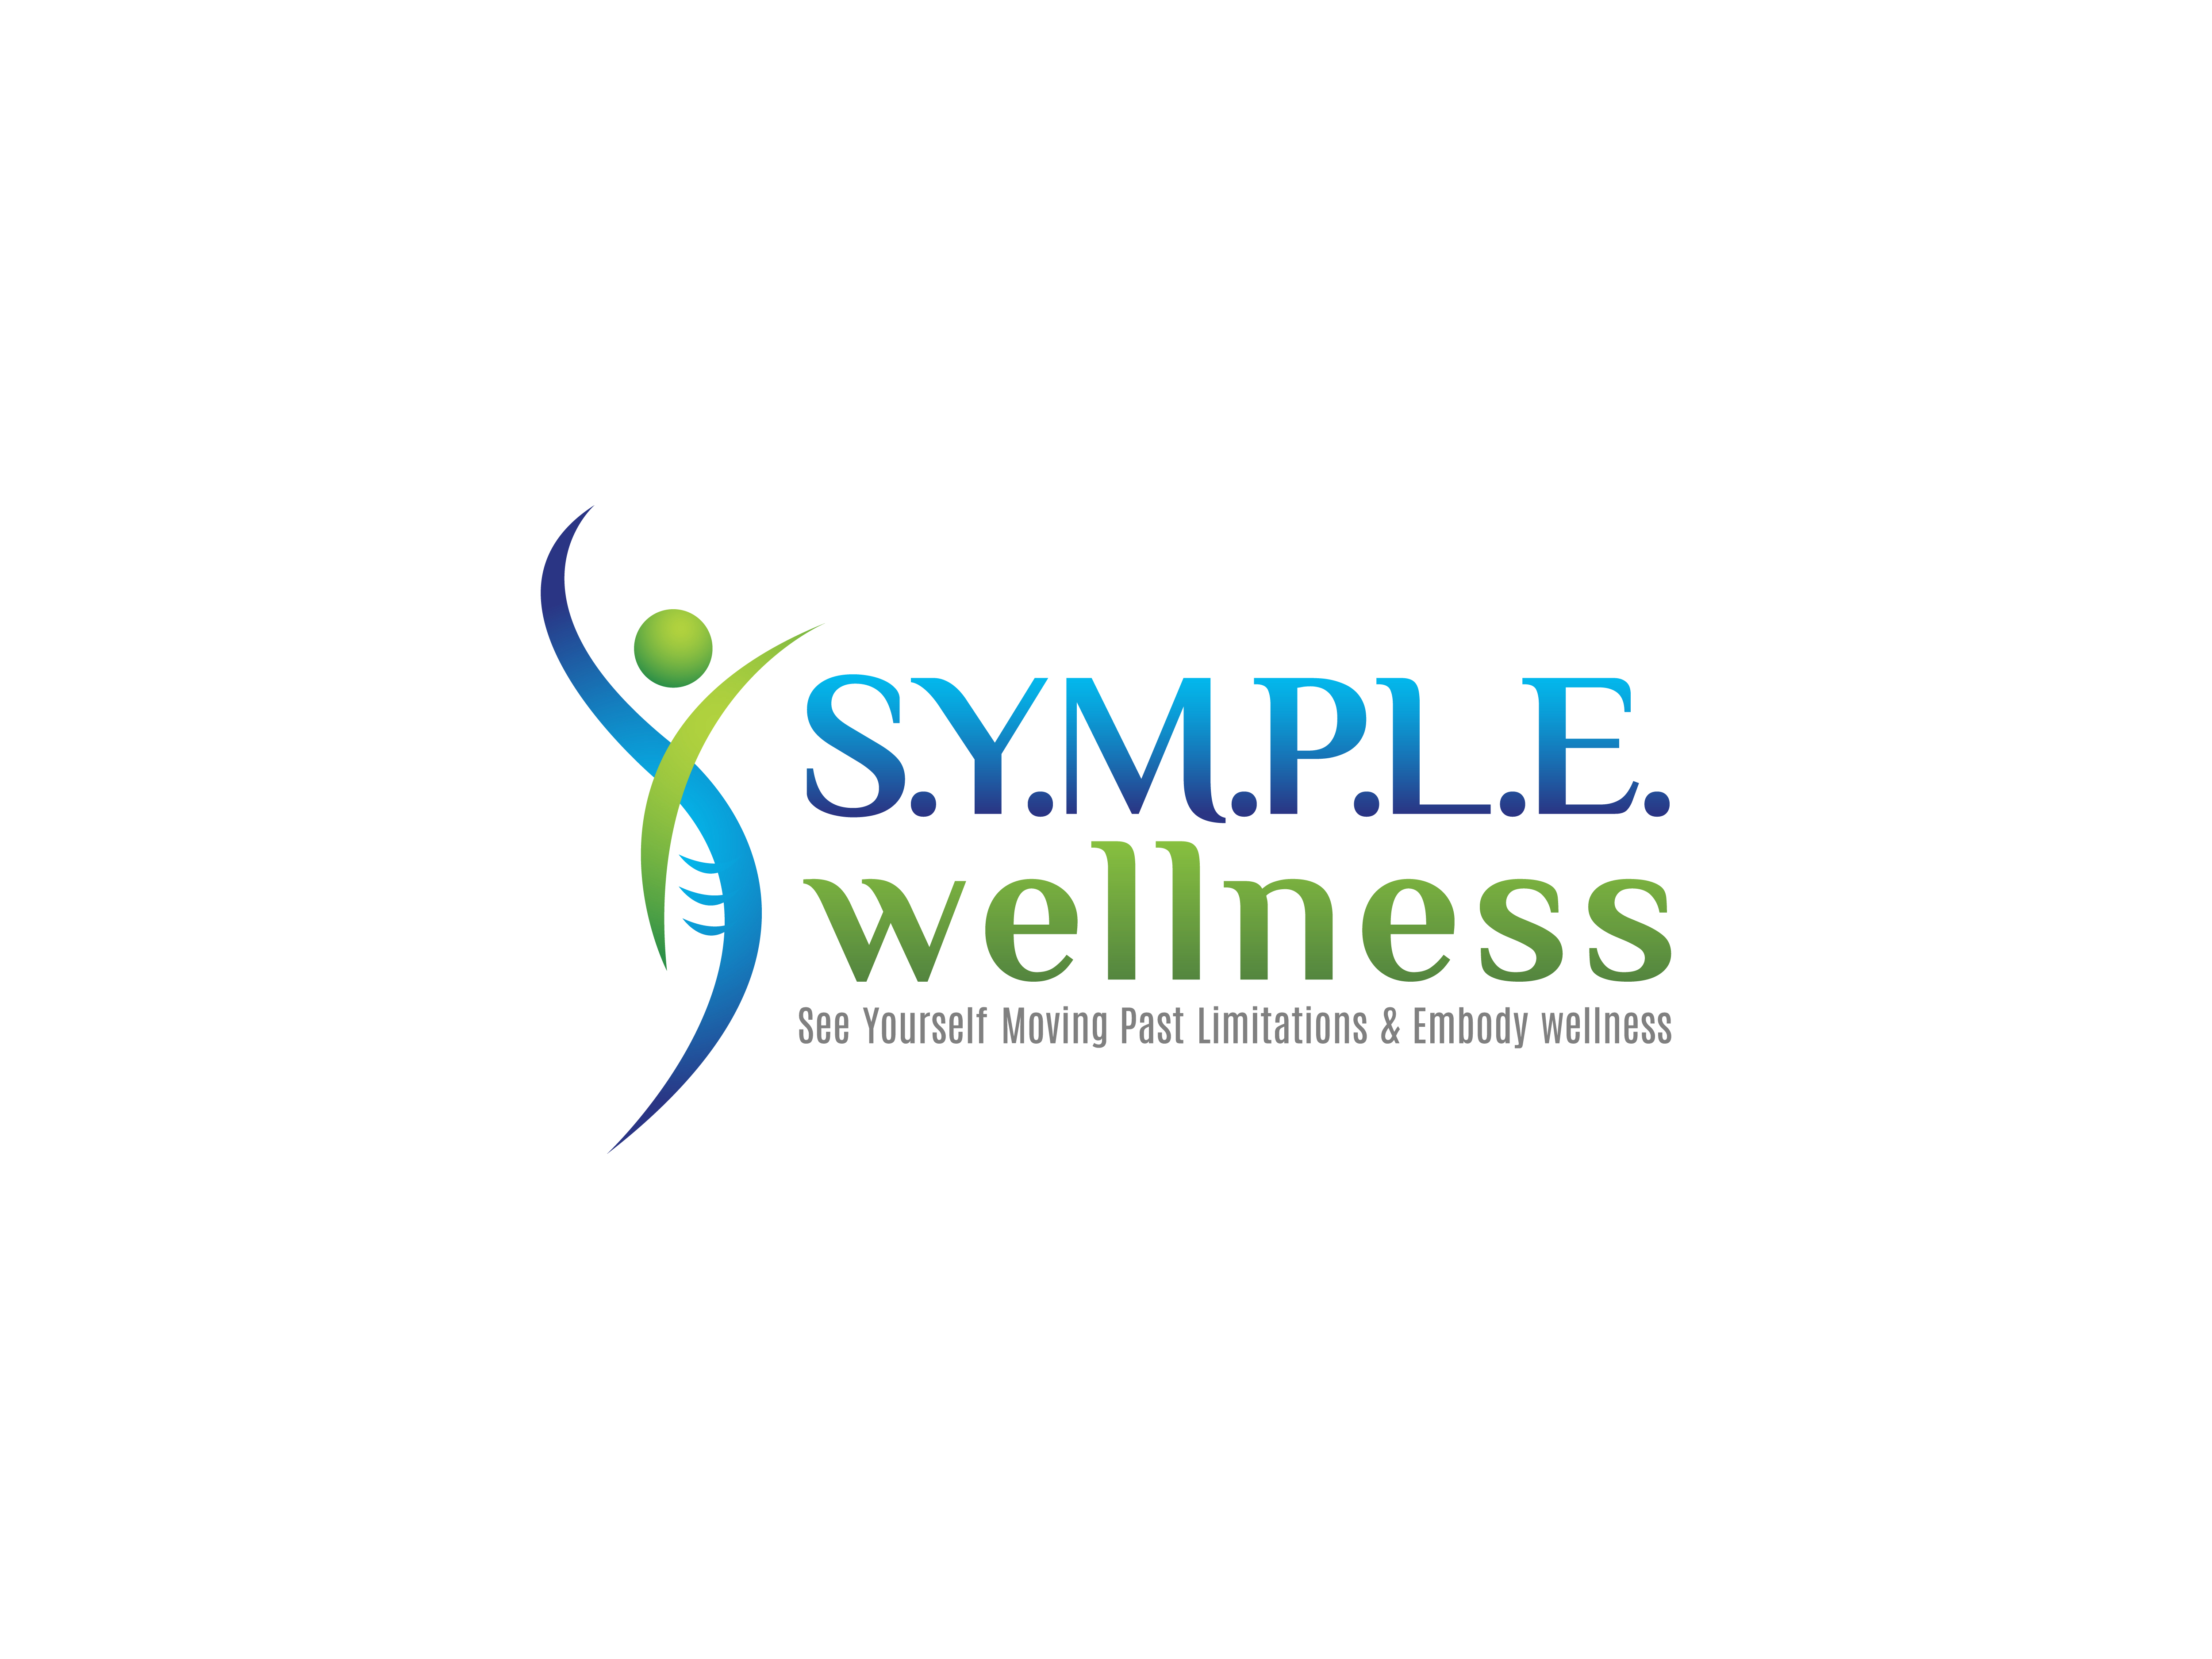 SYMPLE wellness